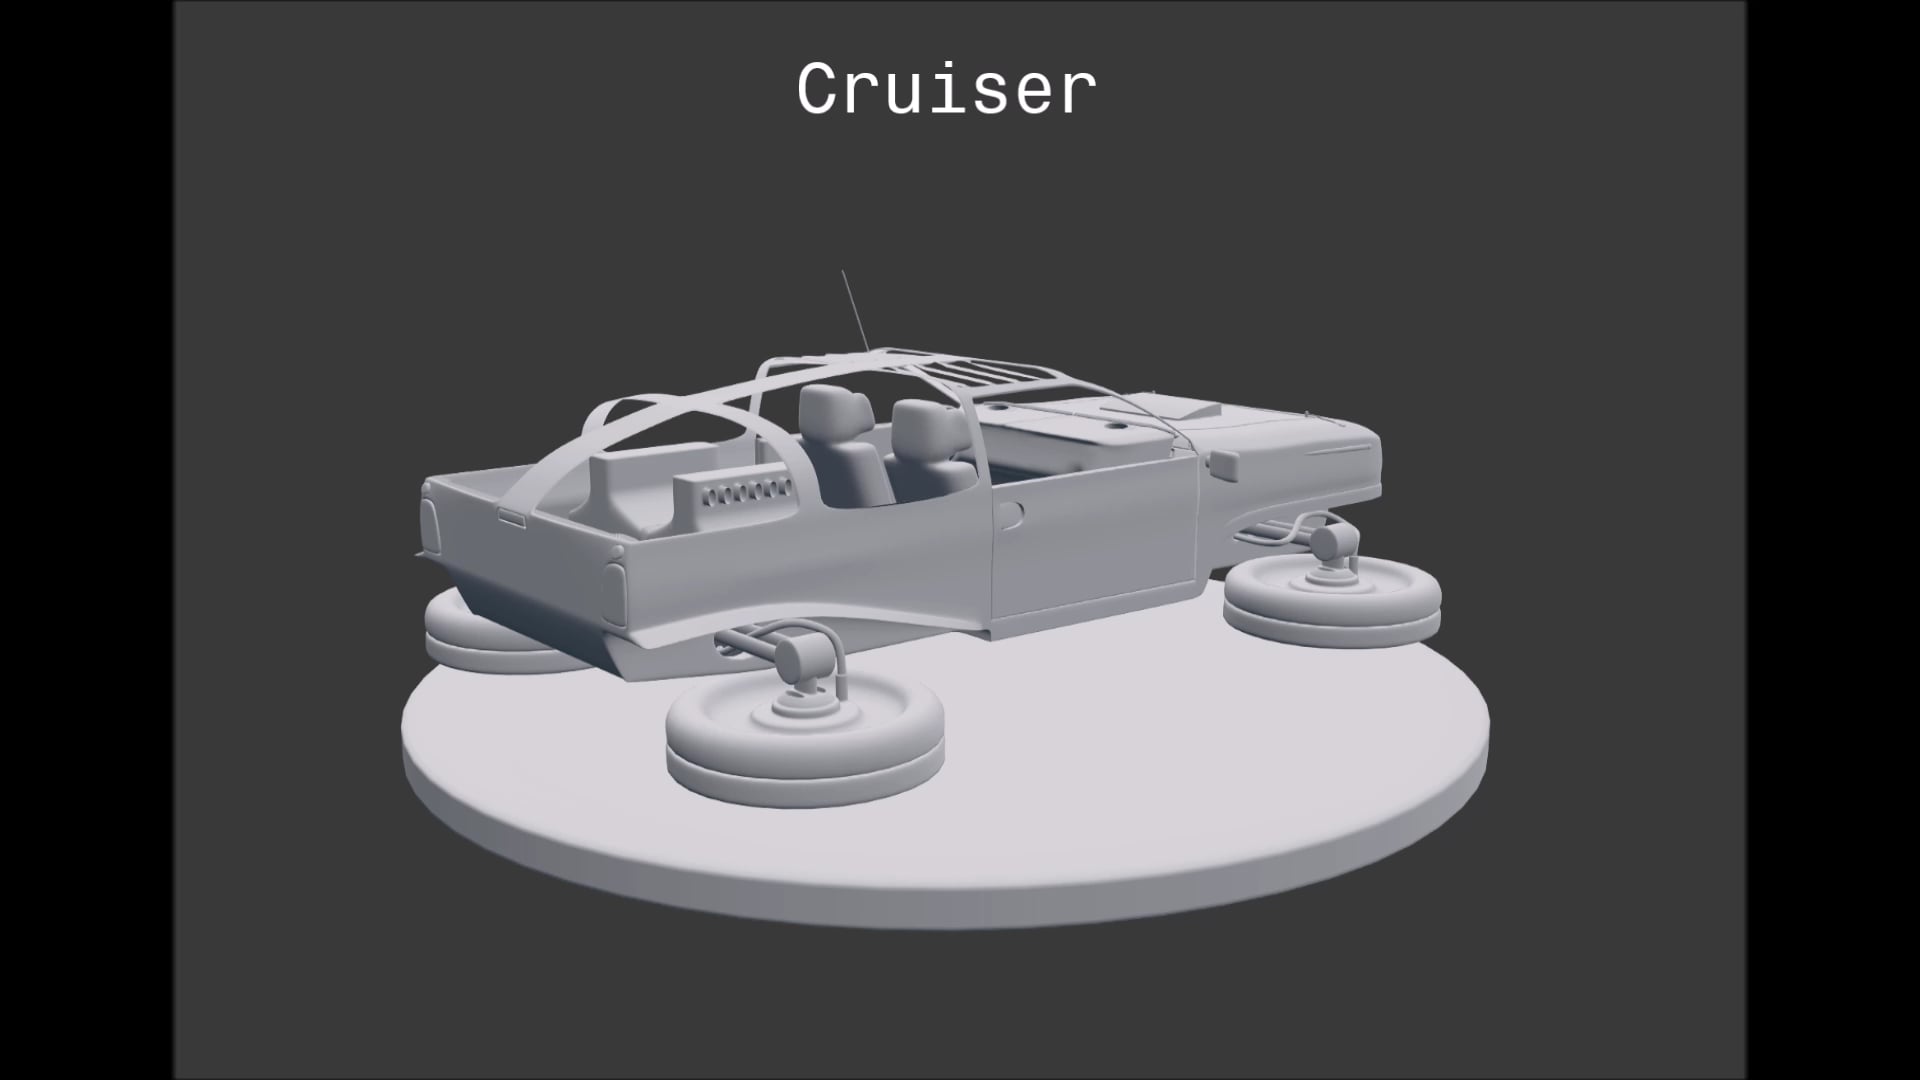 Cruiser